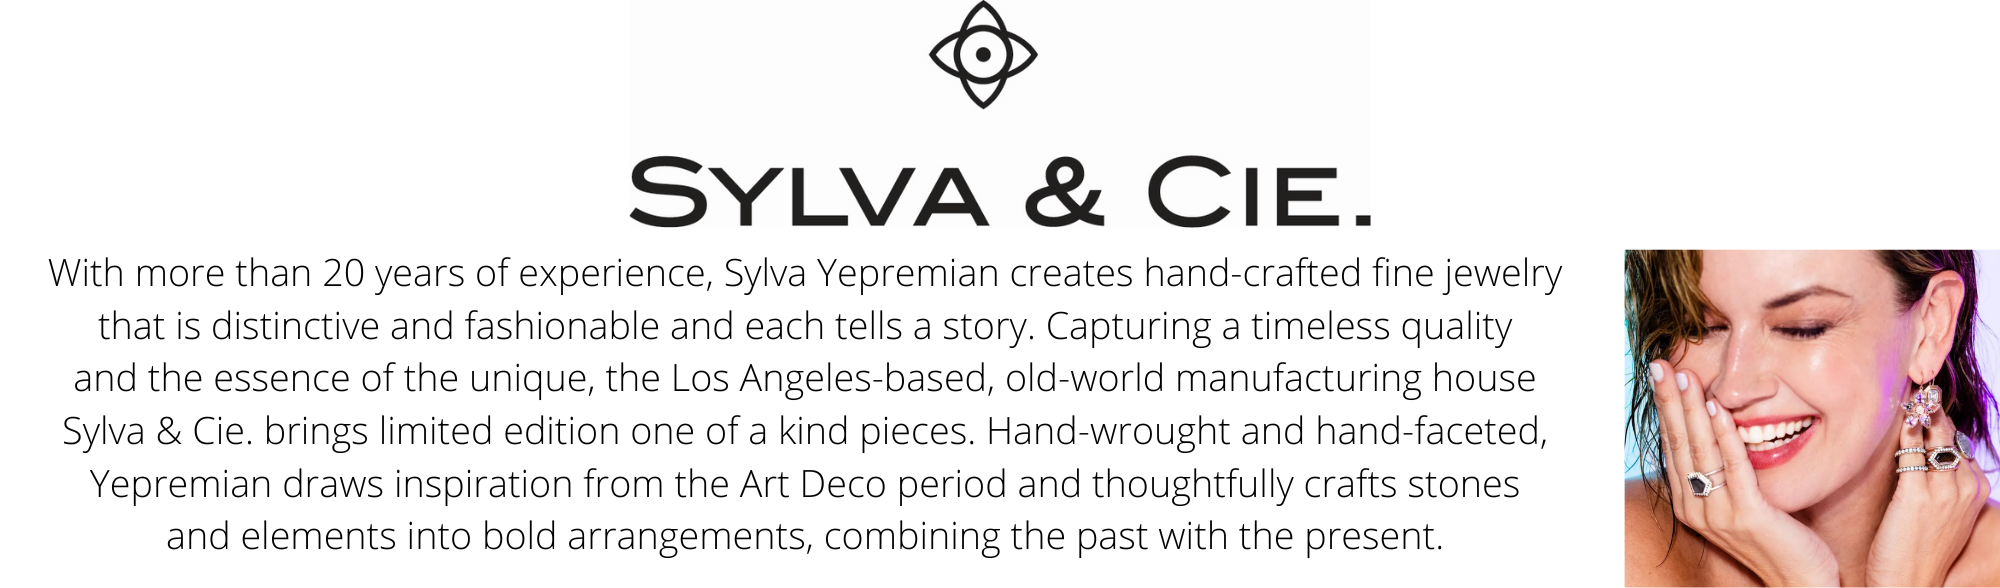 -sylva-and-cie-new-bio-blurb.png